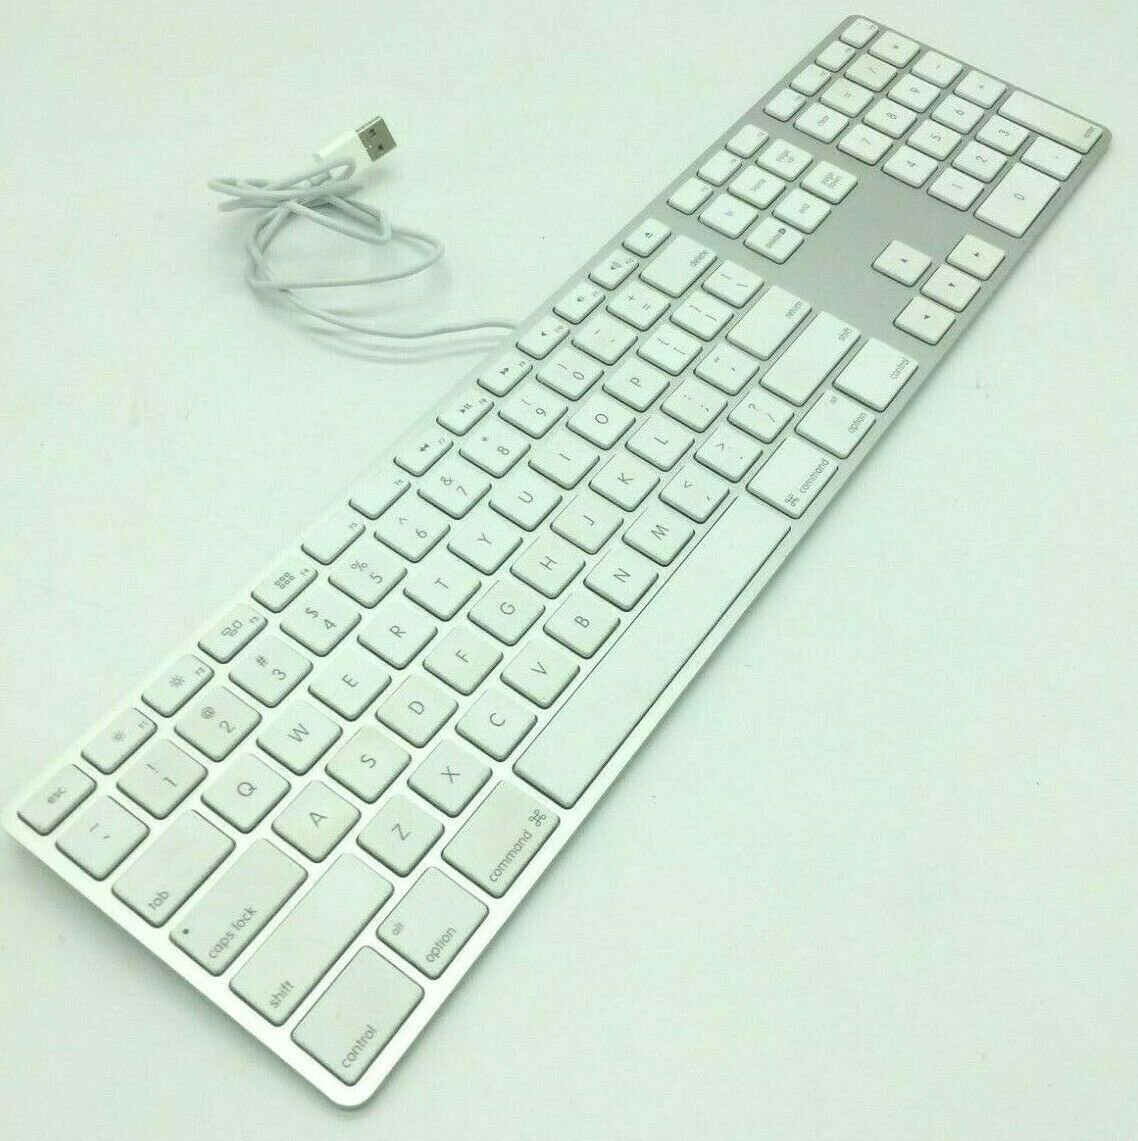 Apple  Slim Usb Wired Keyboard A1243 Mb110ll/a Aluminum Standard  Full Size